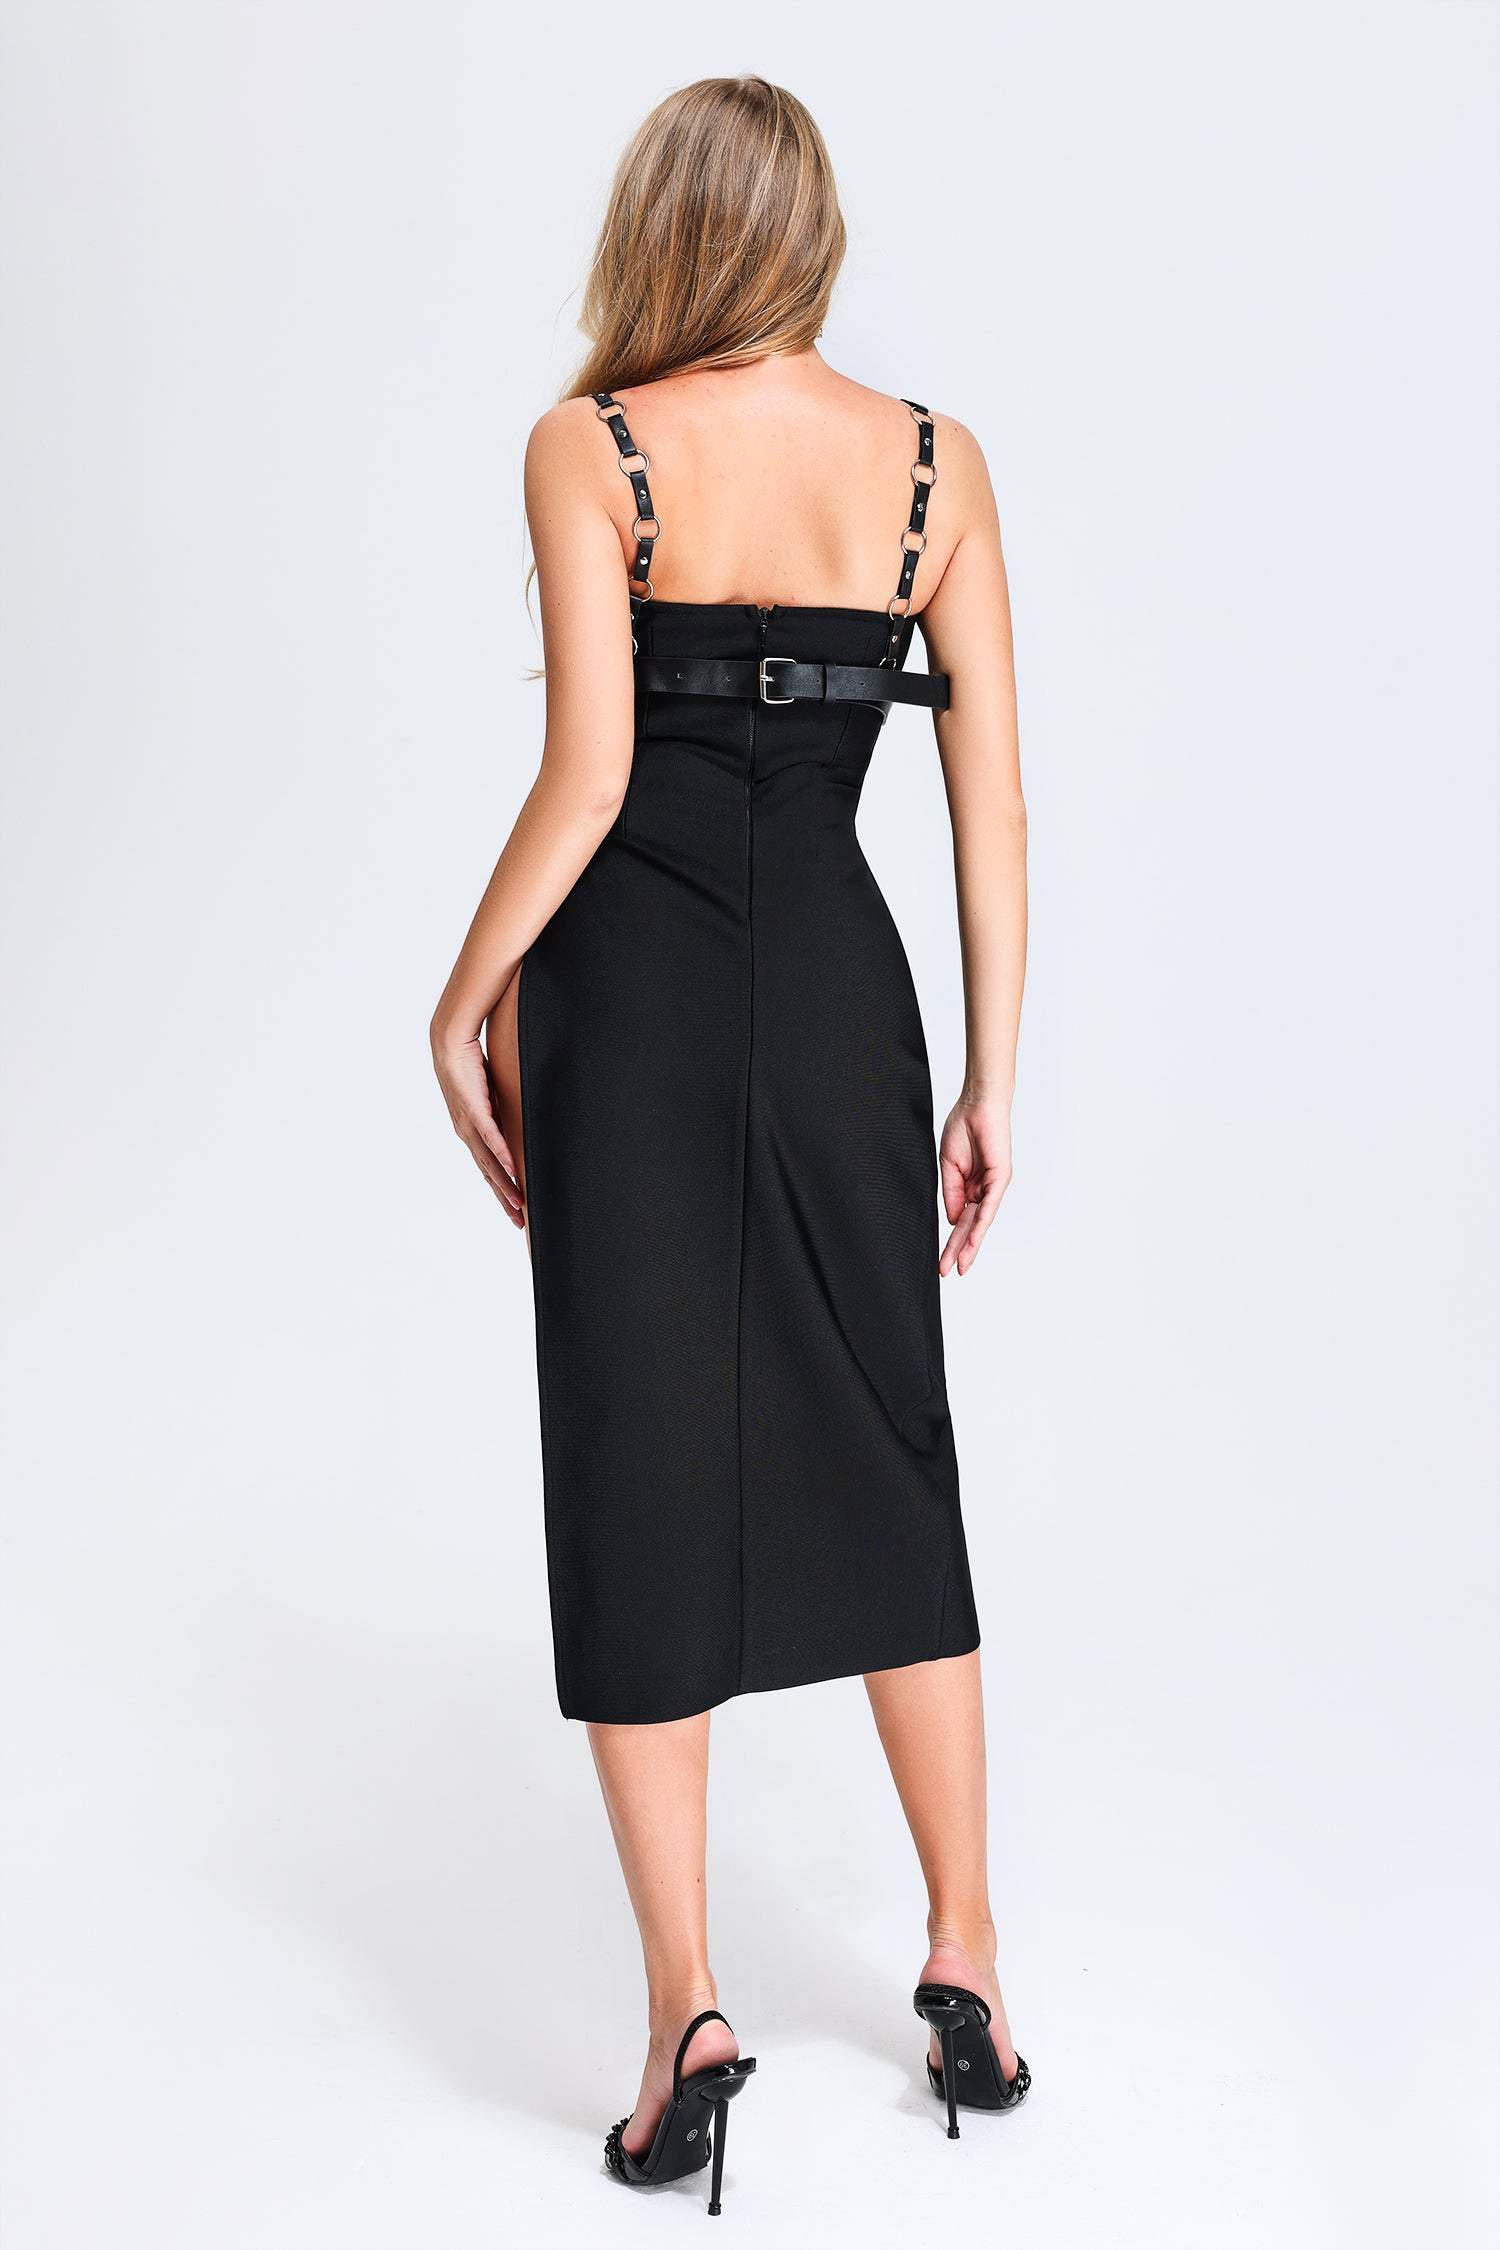 Cherrie Leather Weaved Top & High Slit  Bandage Midi Dress